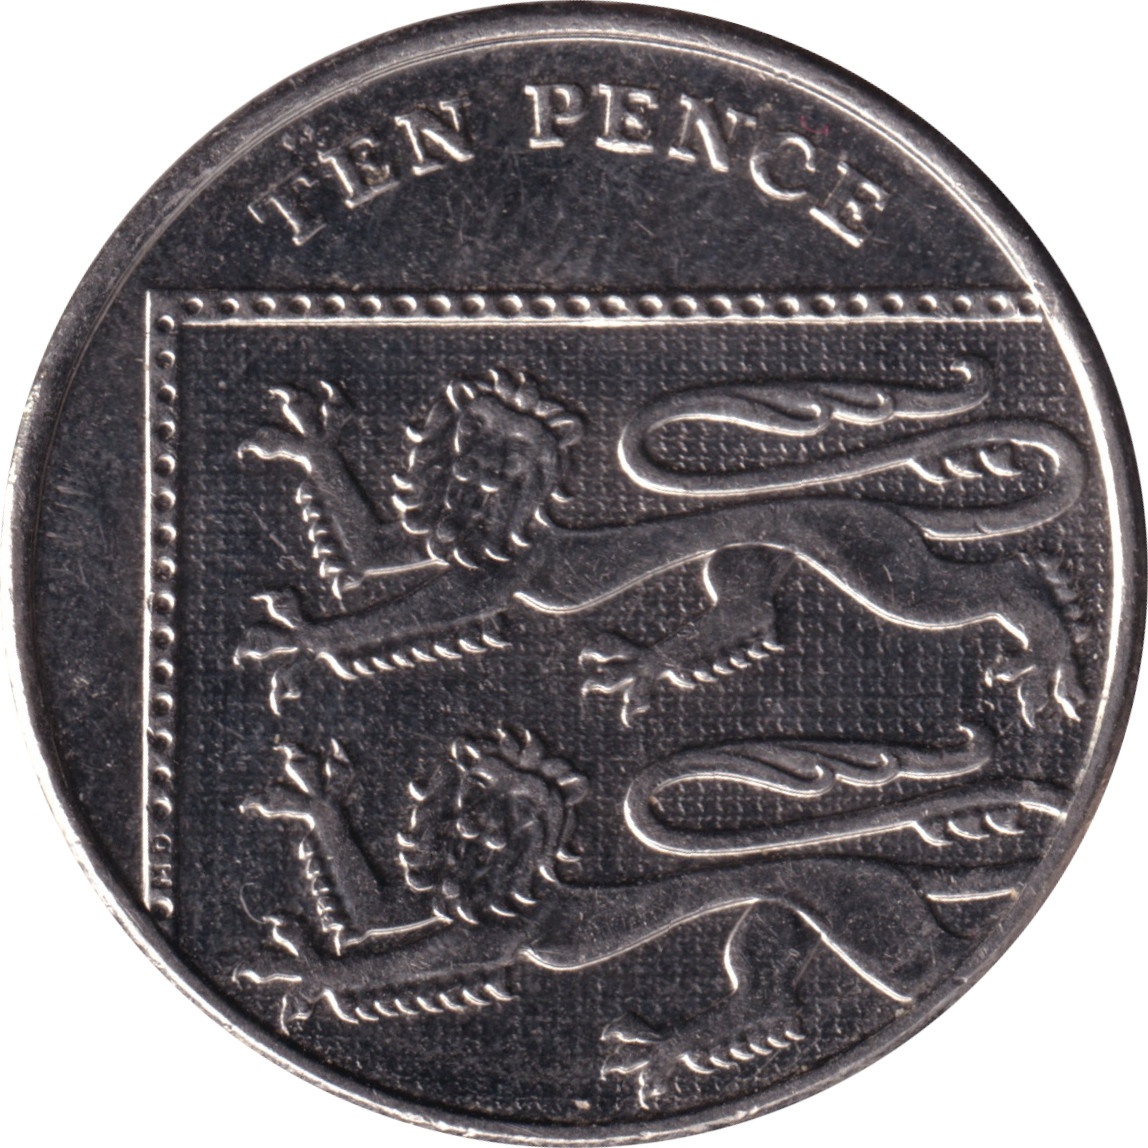 10 pence - Elizabeth II - Tête historique